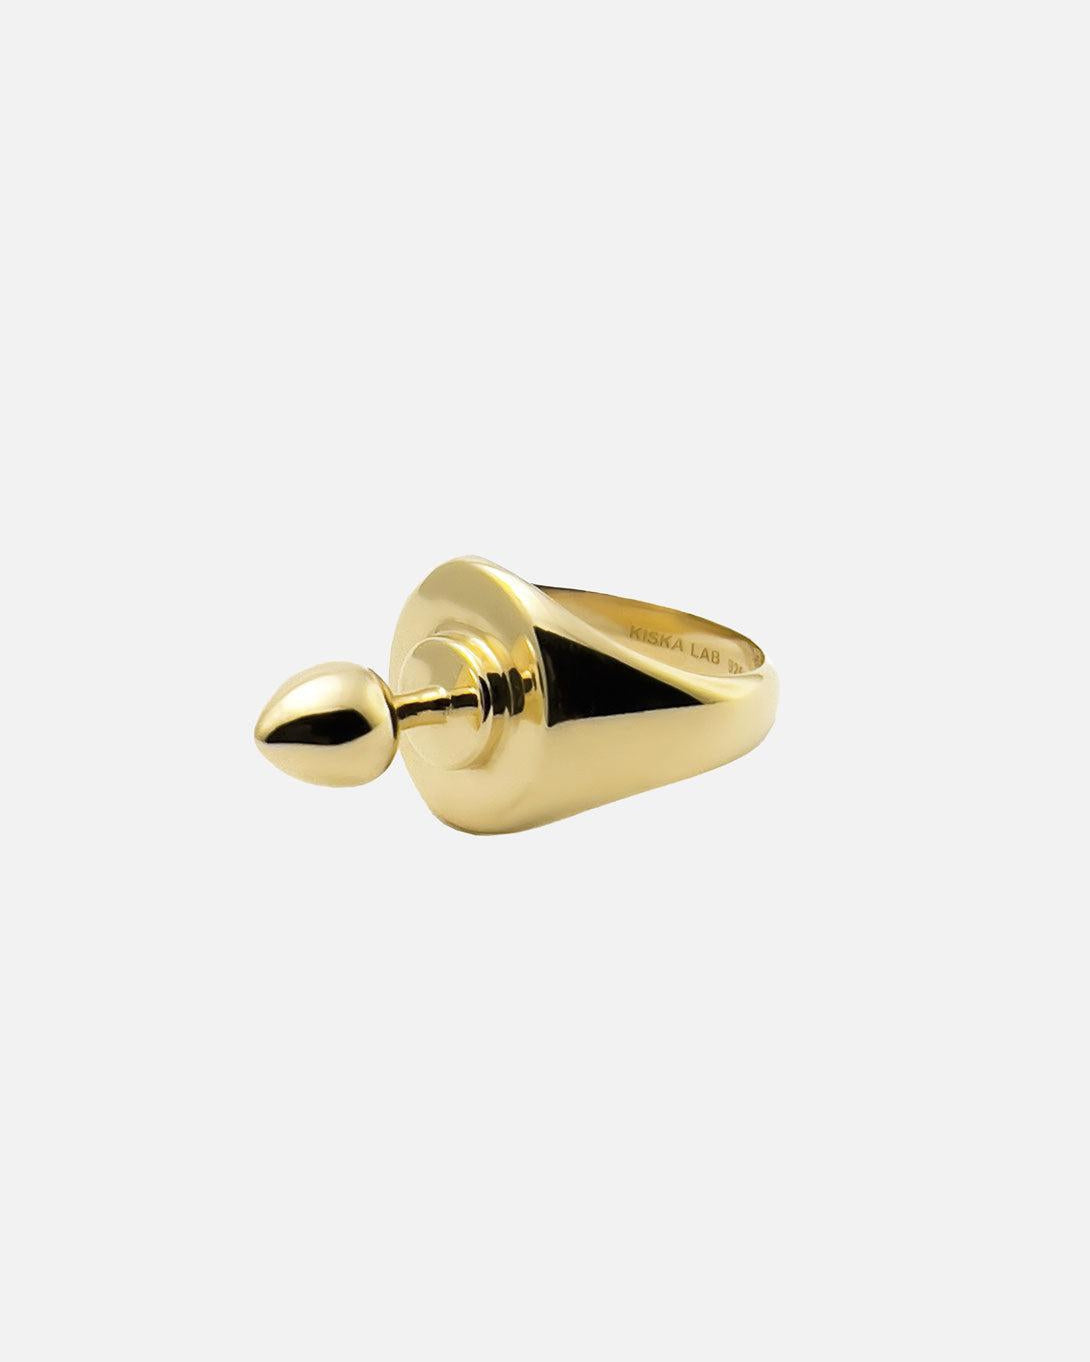 Gold Mini Plug Signet Ring - Jewelry - Kiska Lab - Elevastor